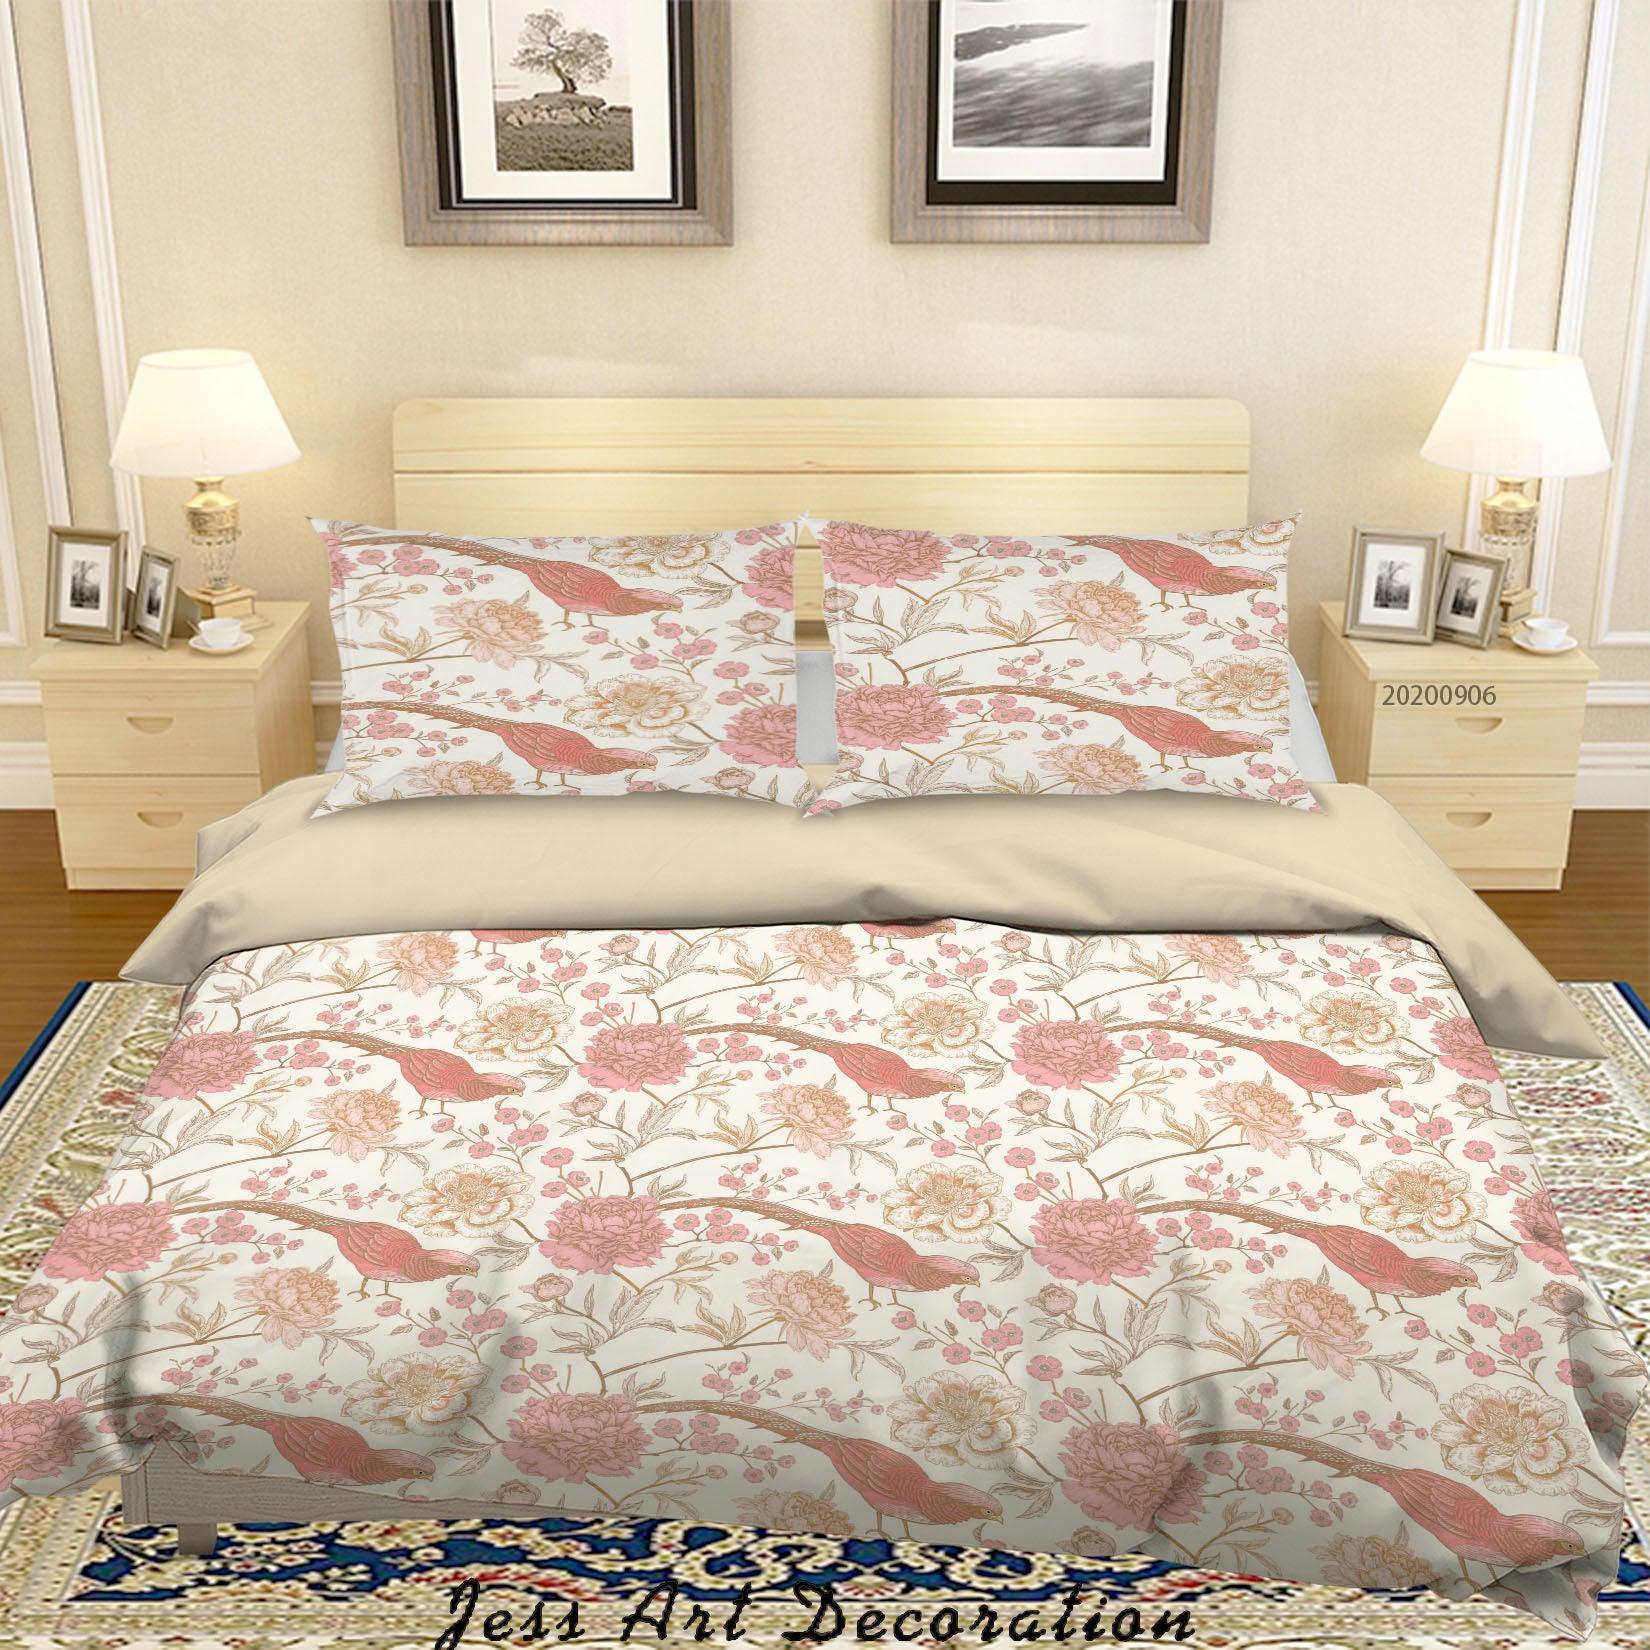 3D Vintage Leaves Bird Floral Pattern Quilt Cover Set Bedding Set Duvet Cover Pillowcases WJ 3637- Jess Art Decoration